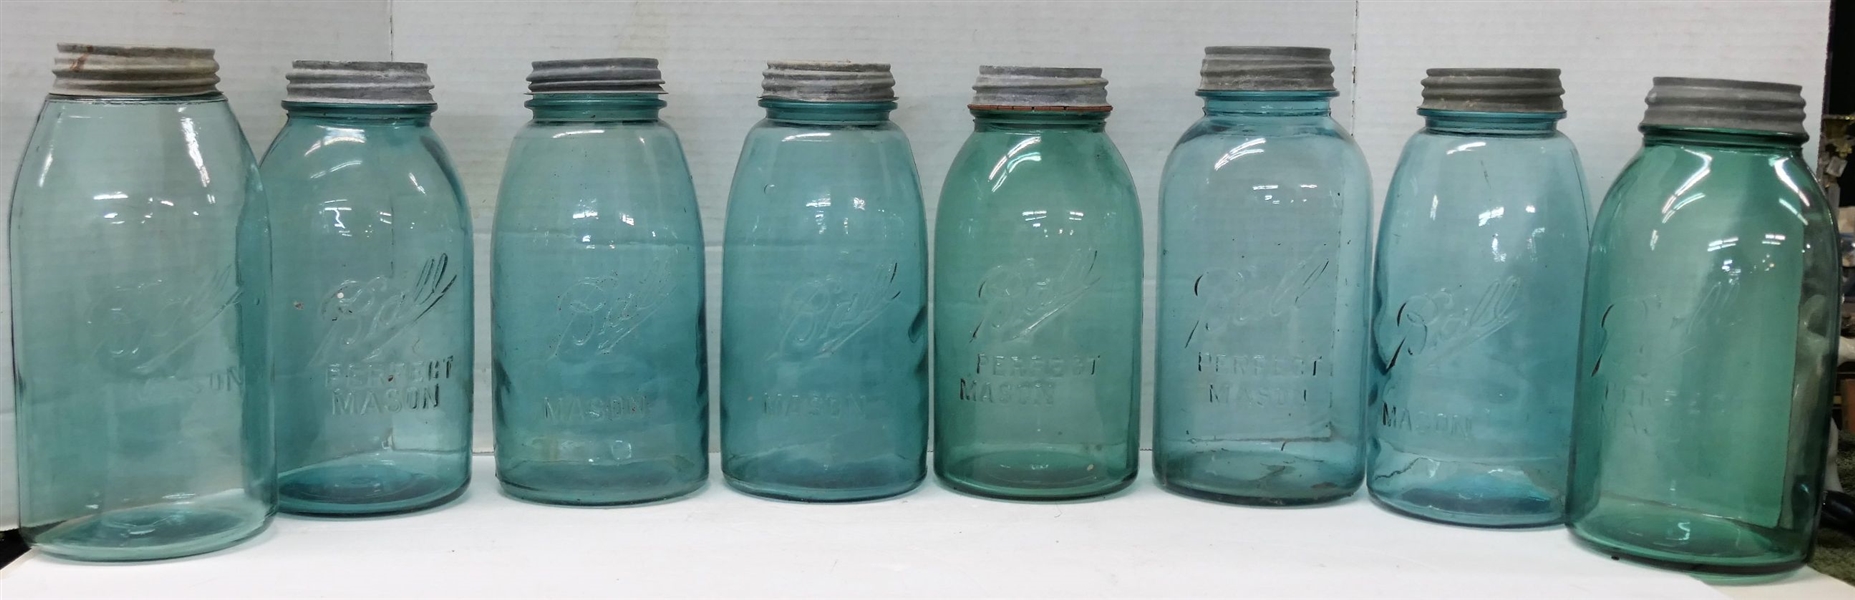 8 Ball Mason 1/2 Gallon Jars with Zinc Lids - 6 Aqua Blue and 2 Blue Green Jars 